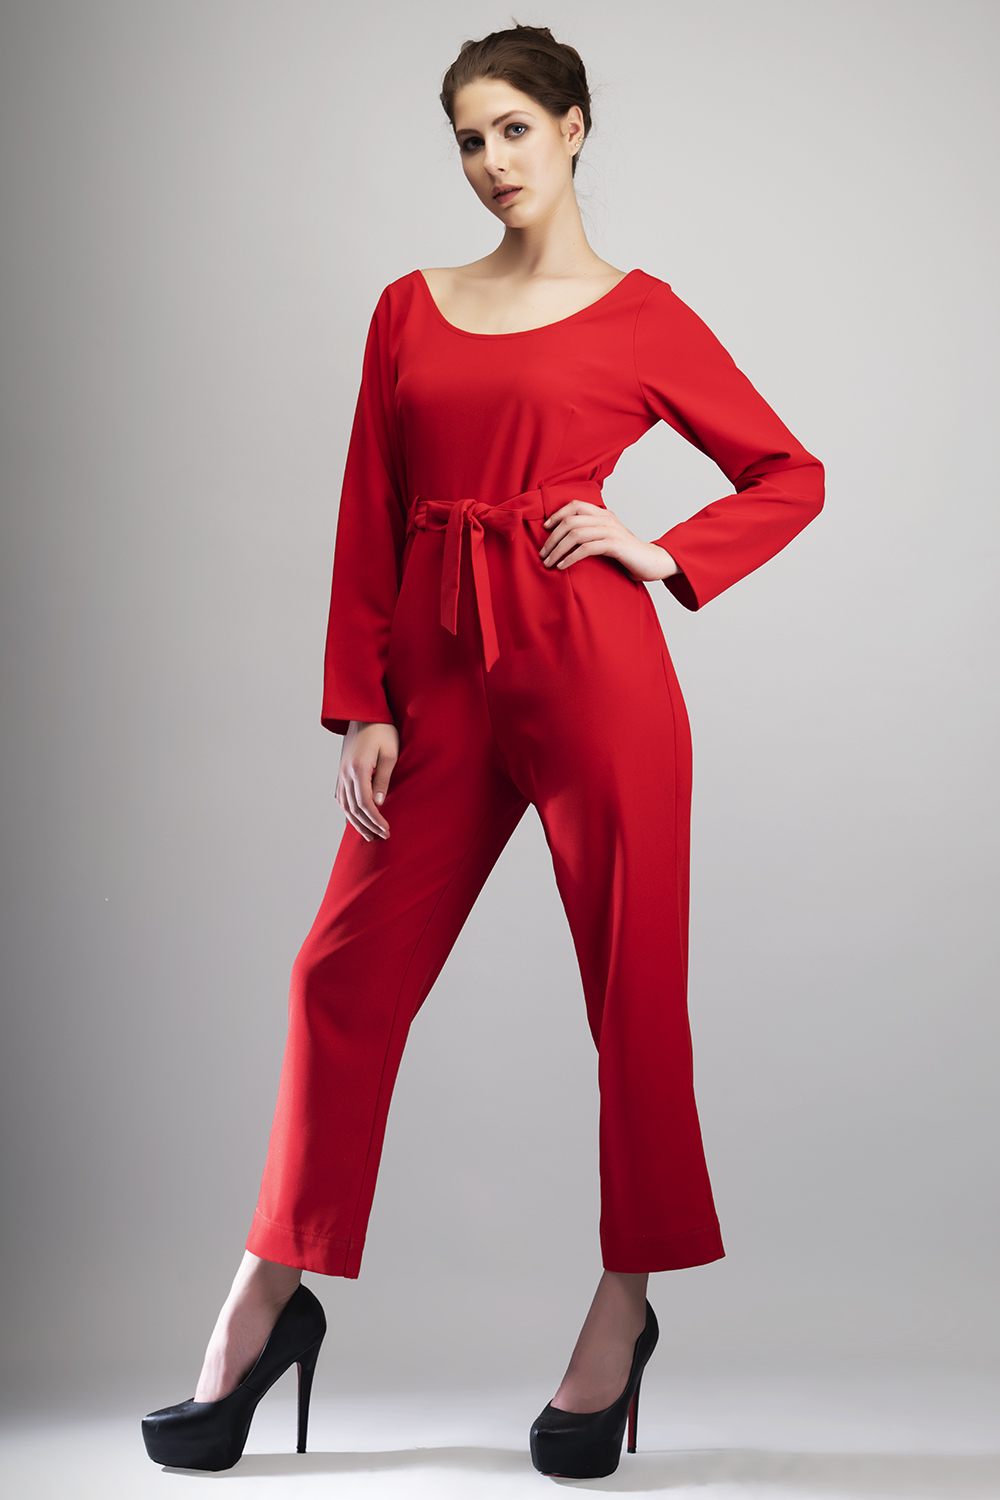 Red Glitter Evening Wear Jumpsuit -3